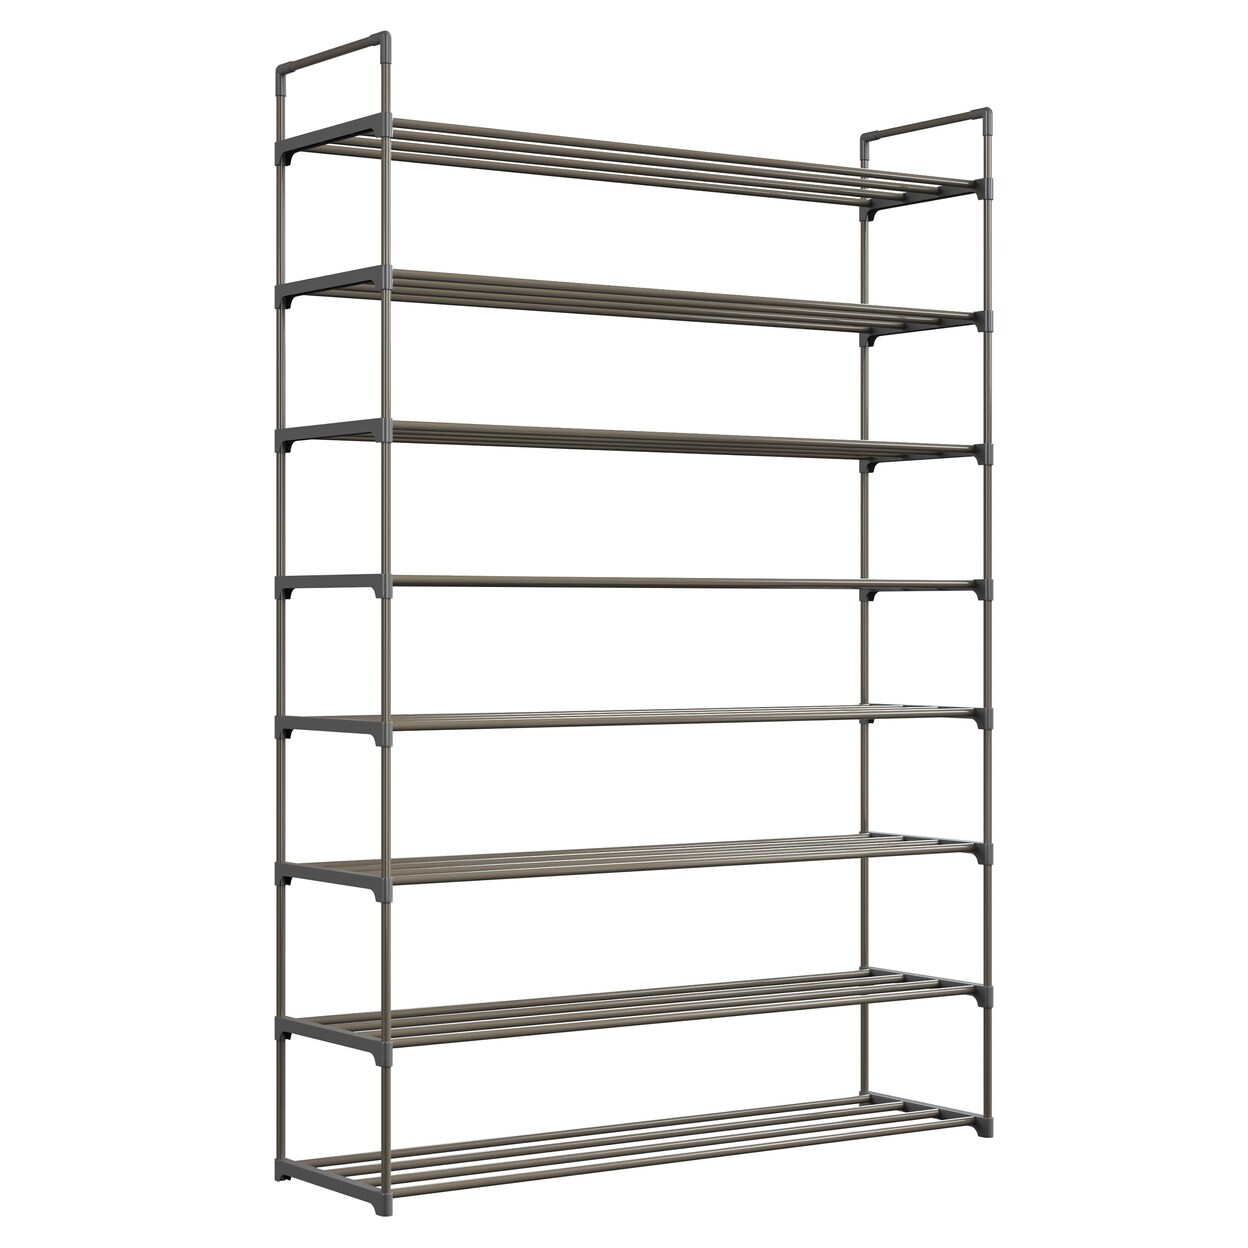 Home-Complete 8 Shelf Shoe Rack Holds 48 Pairs 5 Feet High Hallway Closet Organization